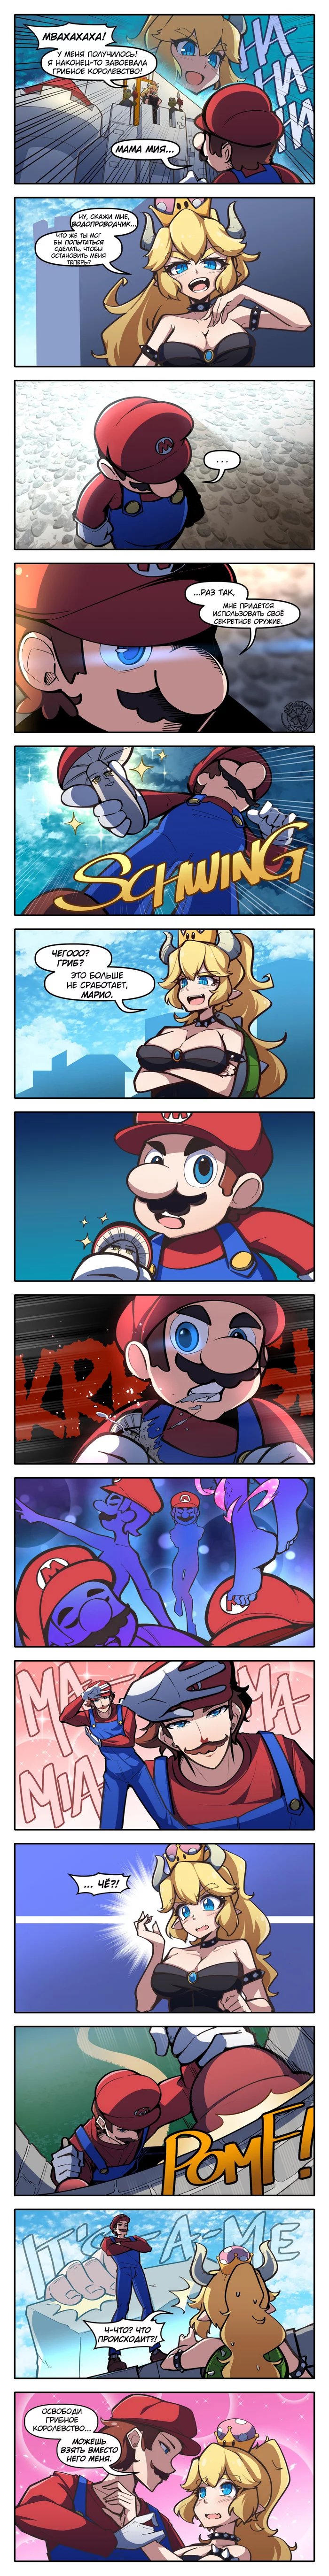 Mario VS. - Comics, Translation, Anime, Translated by myself, Merryweather, Mario, Bowsette, Longpost